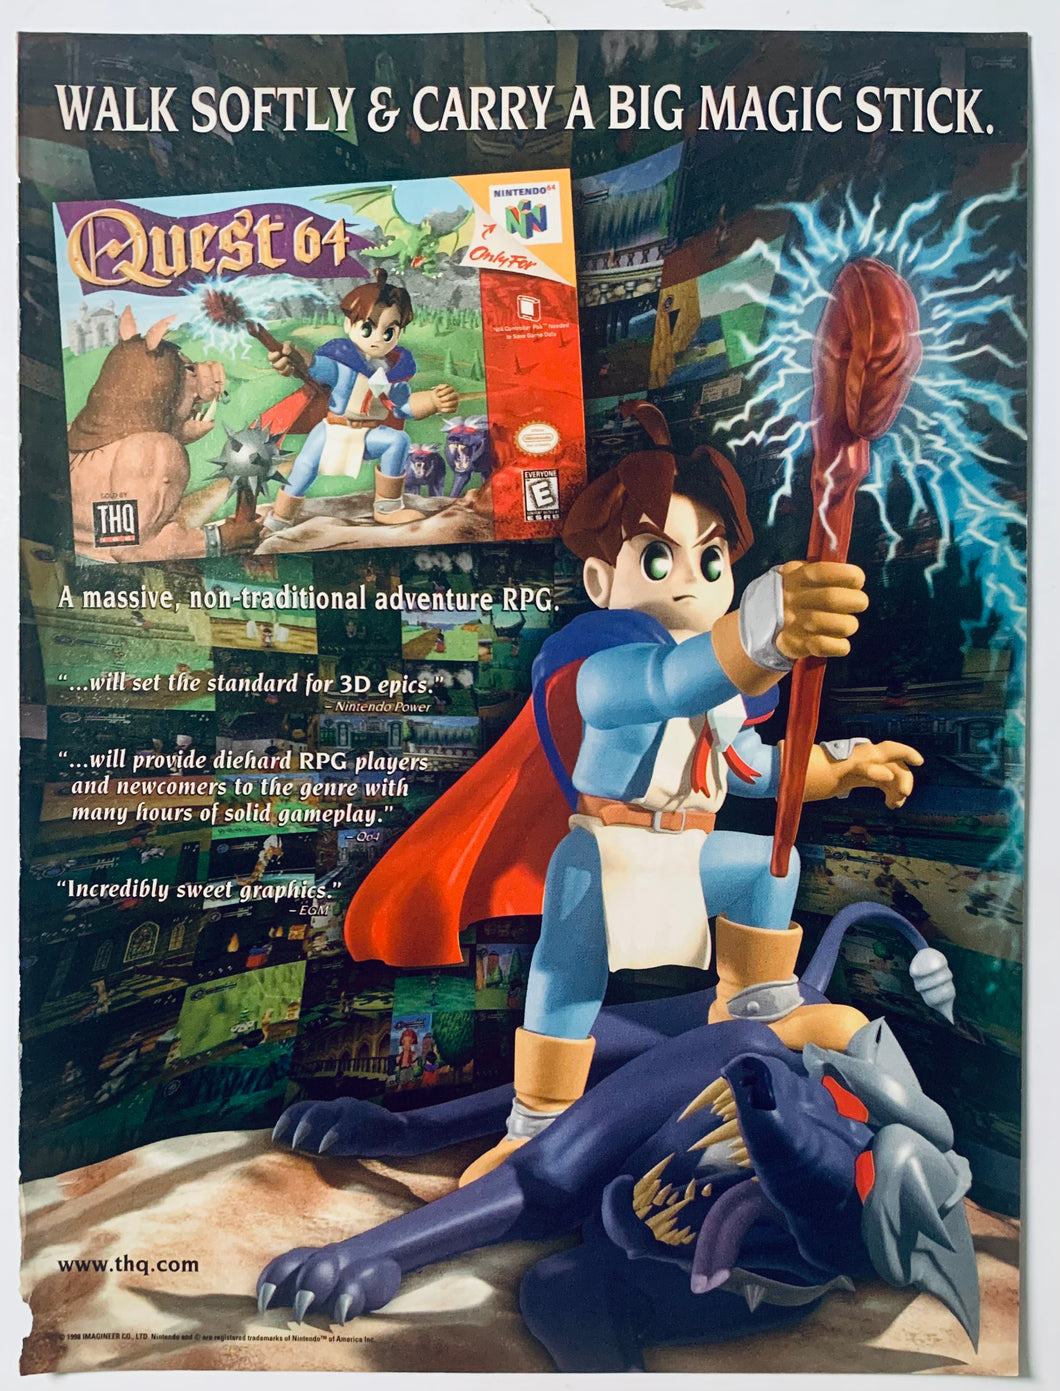 Quest 64 - N64 - Original Vintage Advertisement - Print Ads - Laminated A4 Poster